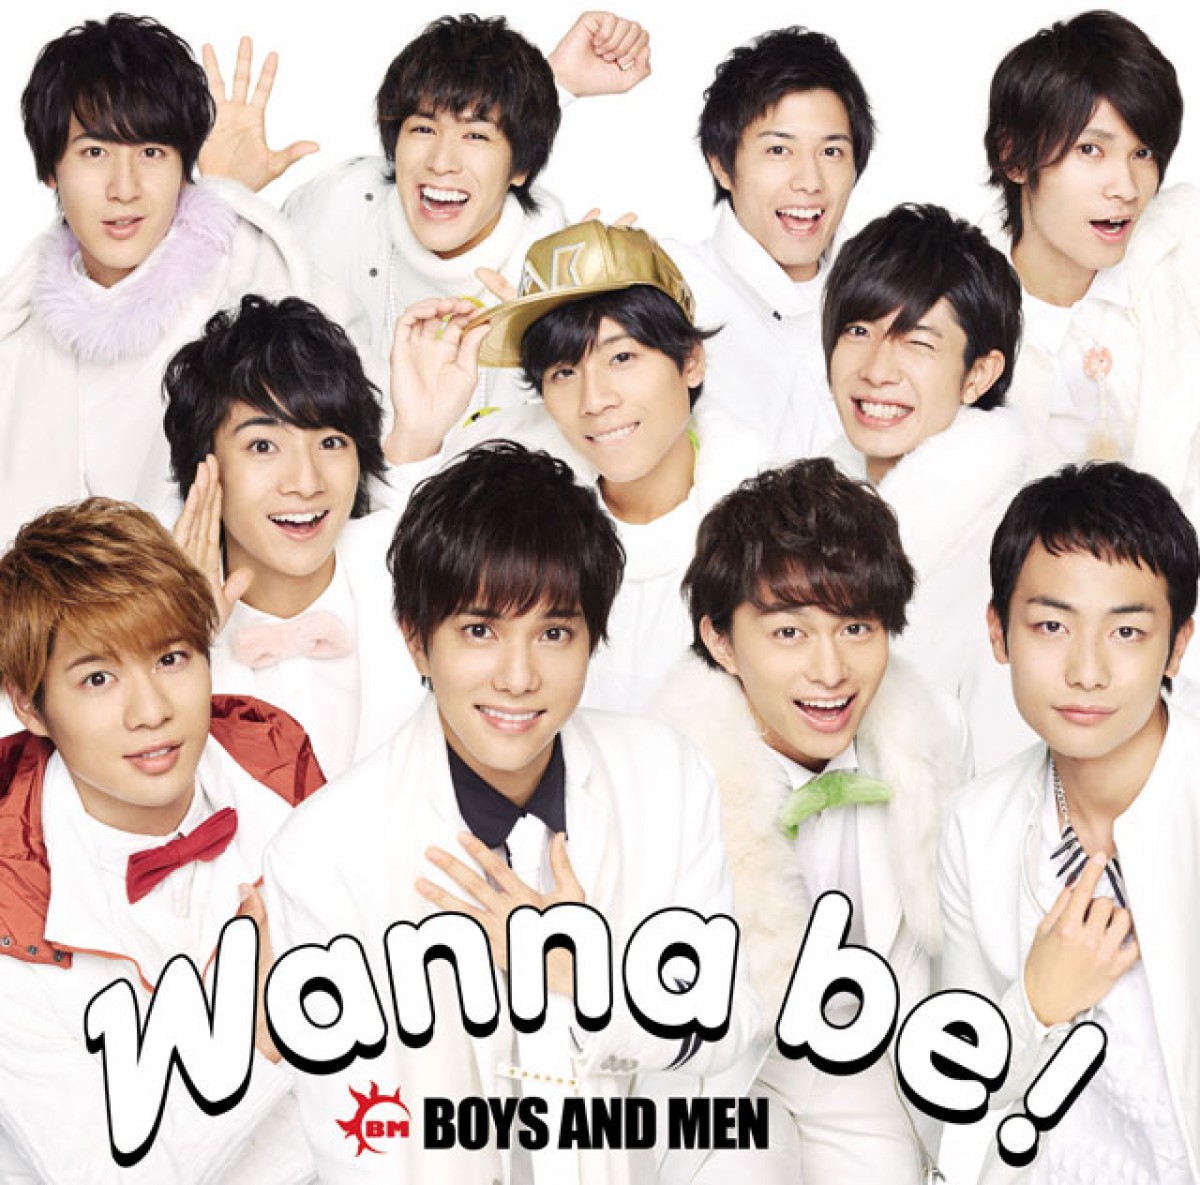 BOYS AND MEN、『スッキリ!!』出演決定！　新曲「Wanna be！」生披露